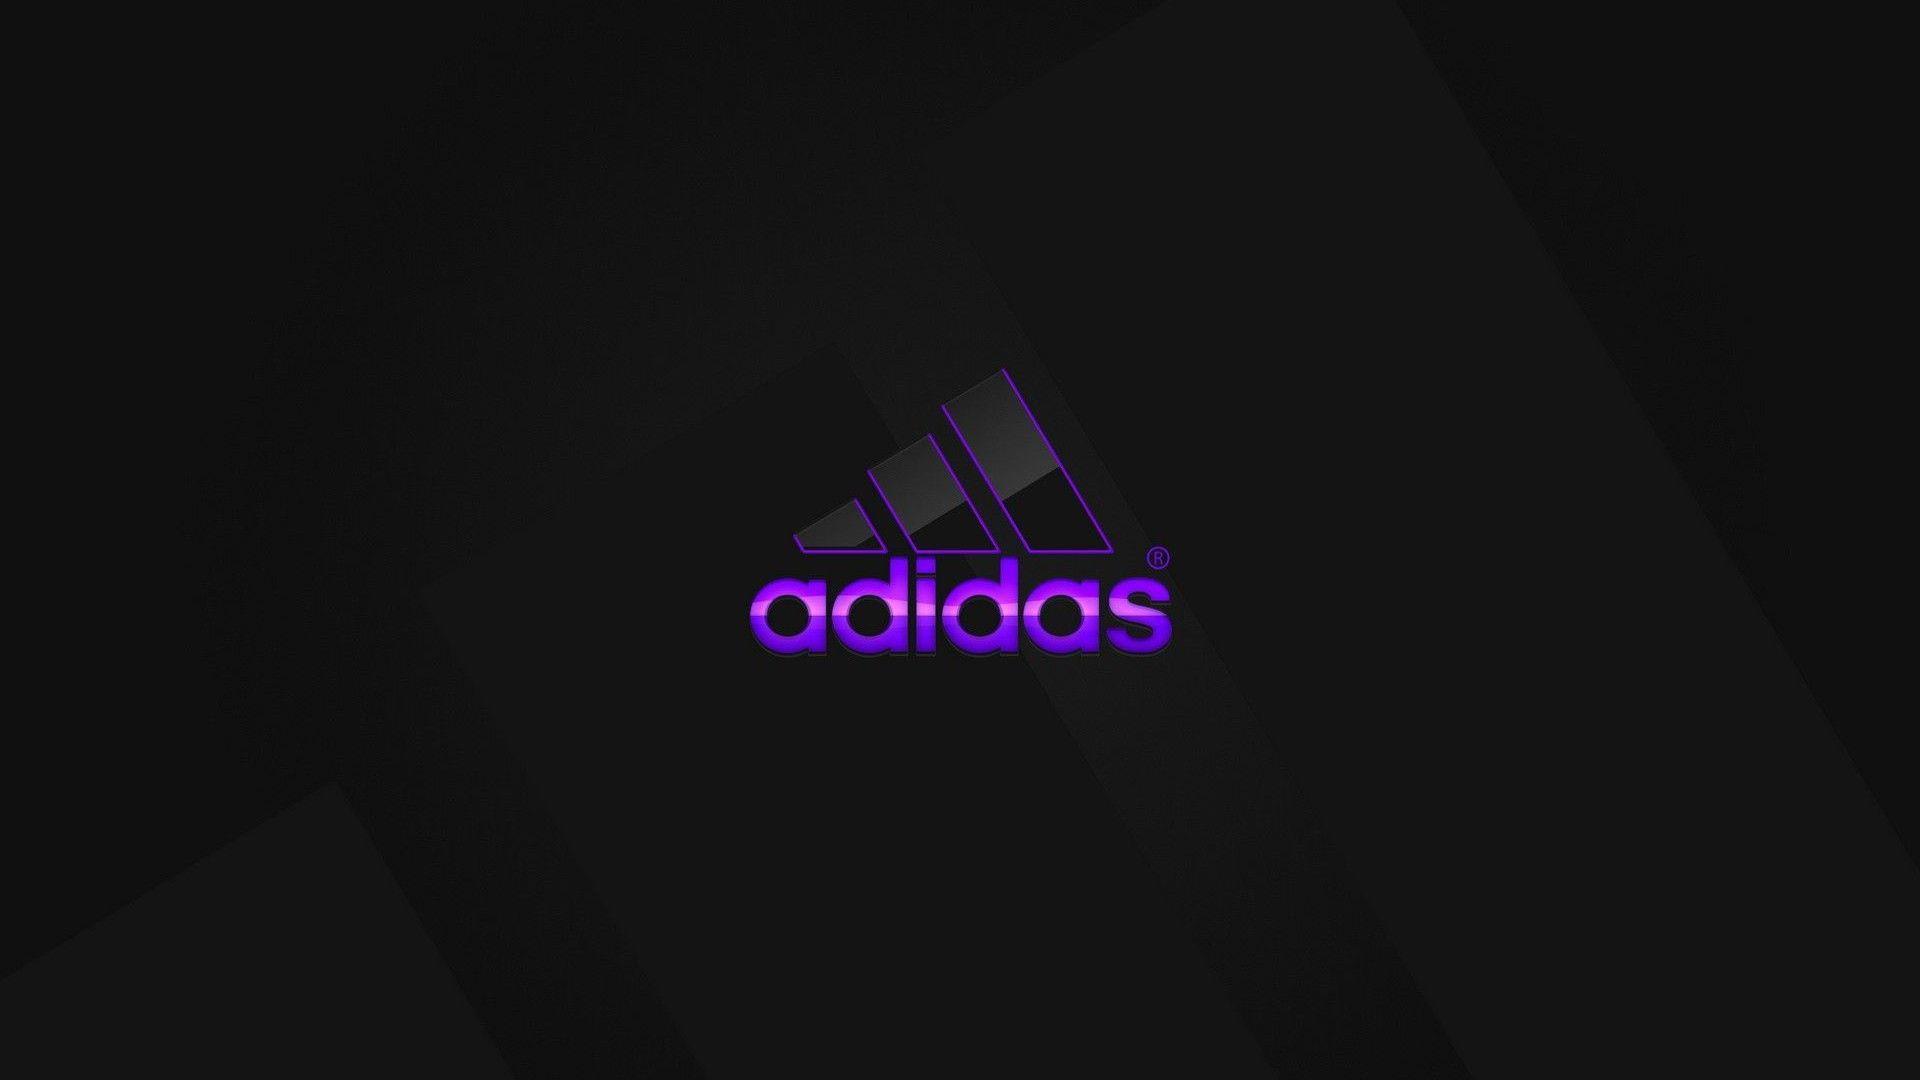 2015 Adidas Logo - Adidas Logo Wallpapers 2017 - Wallpaper Cave